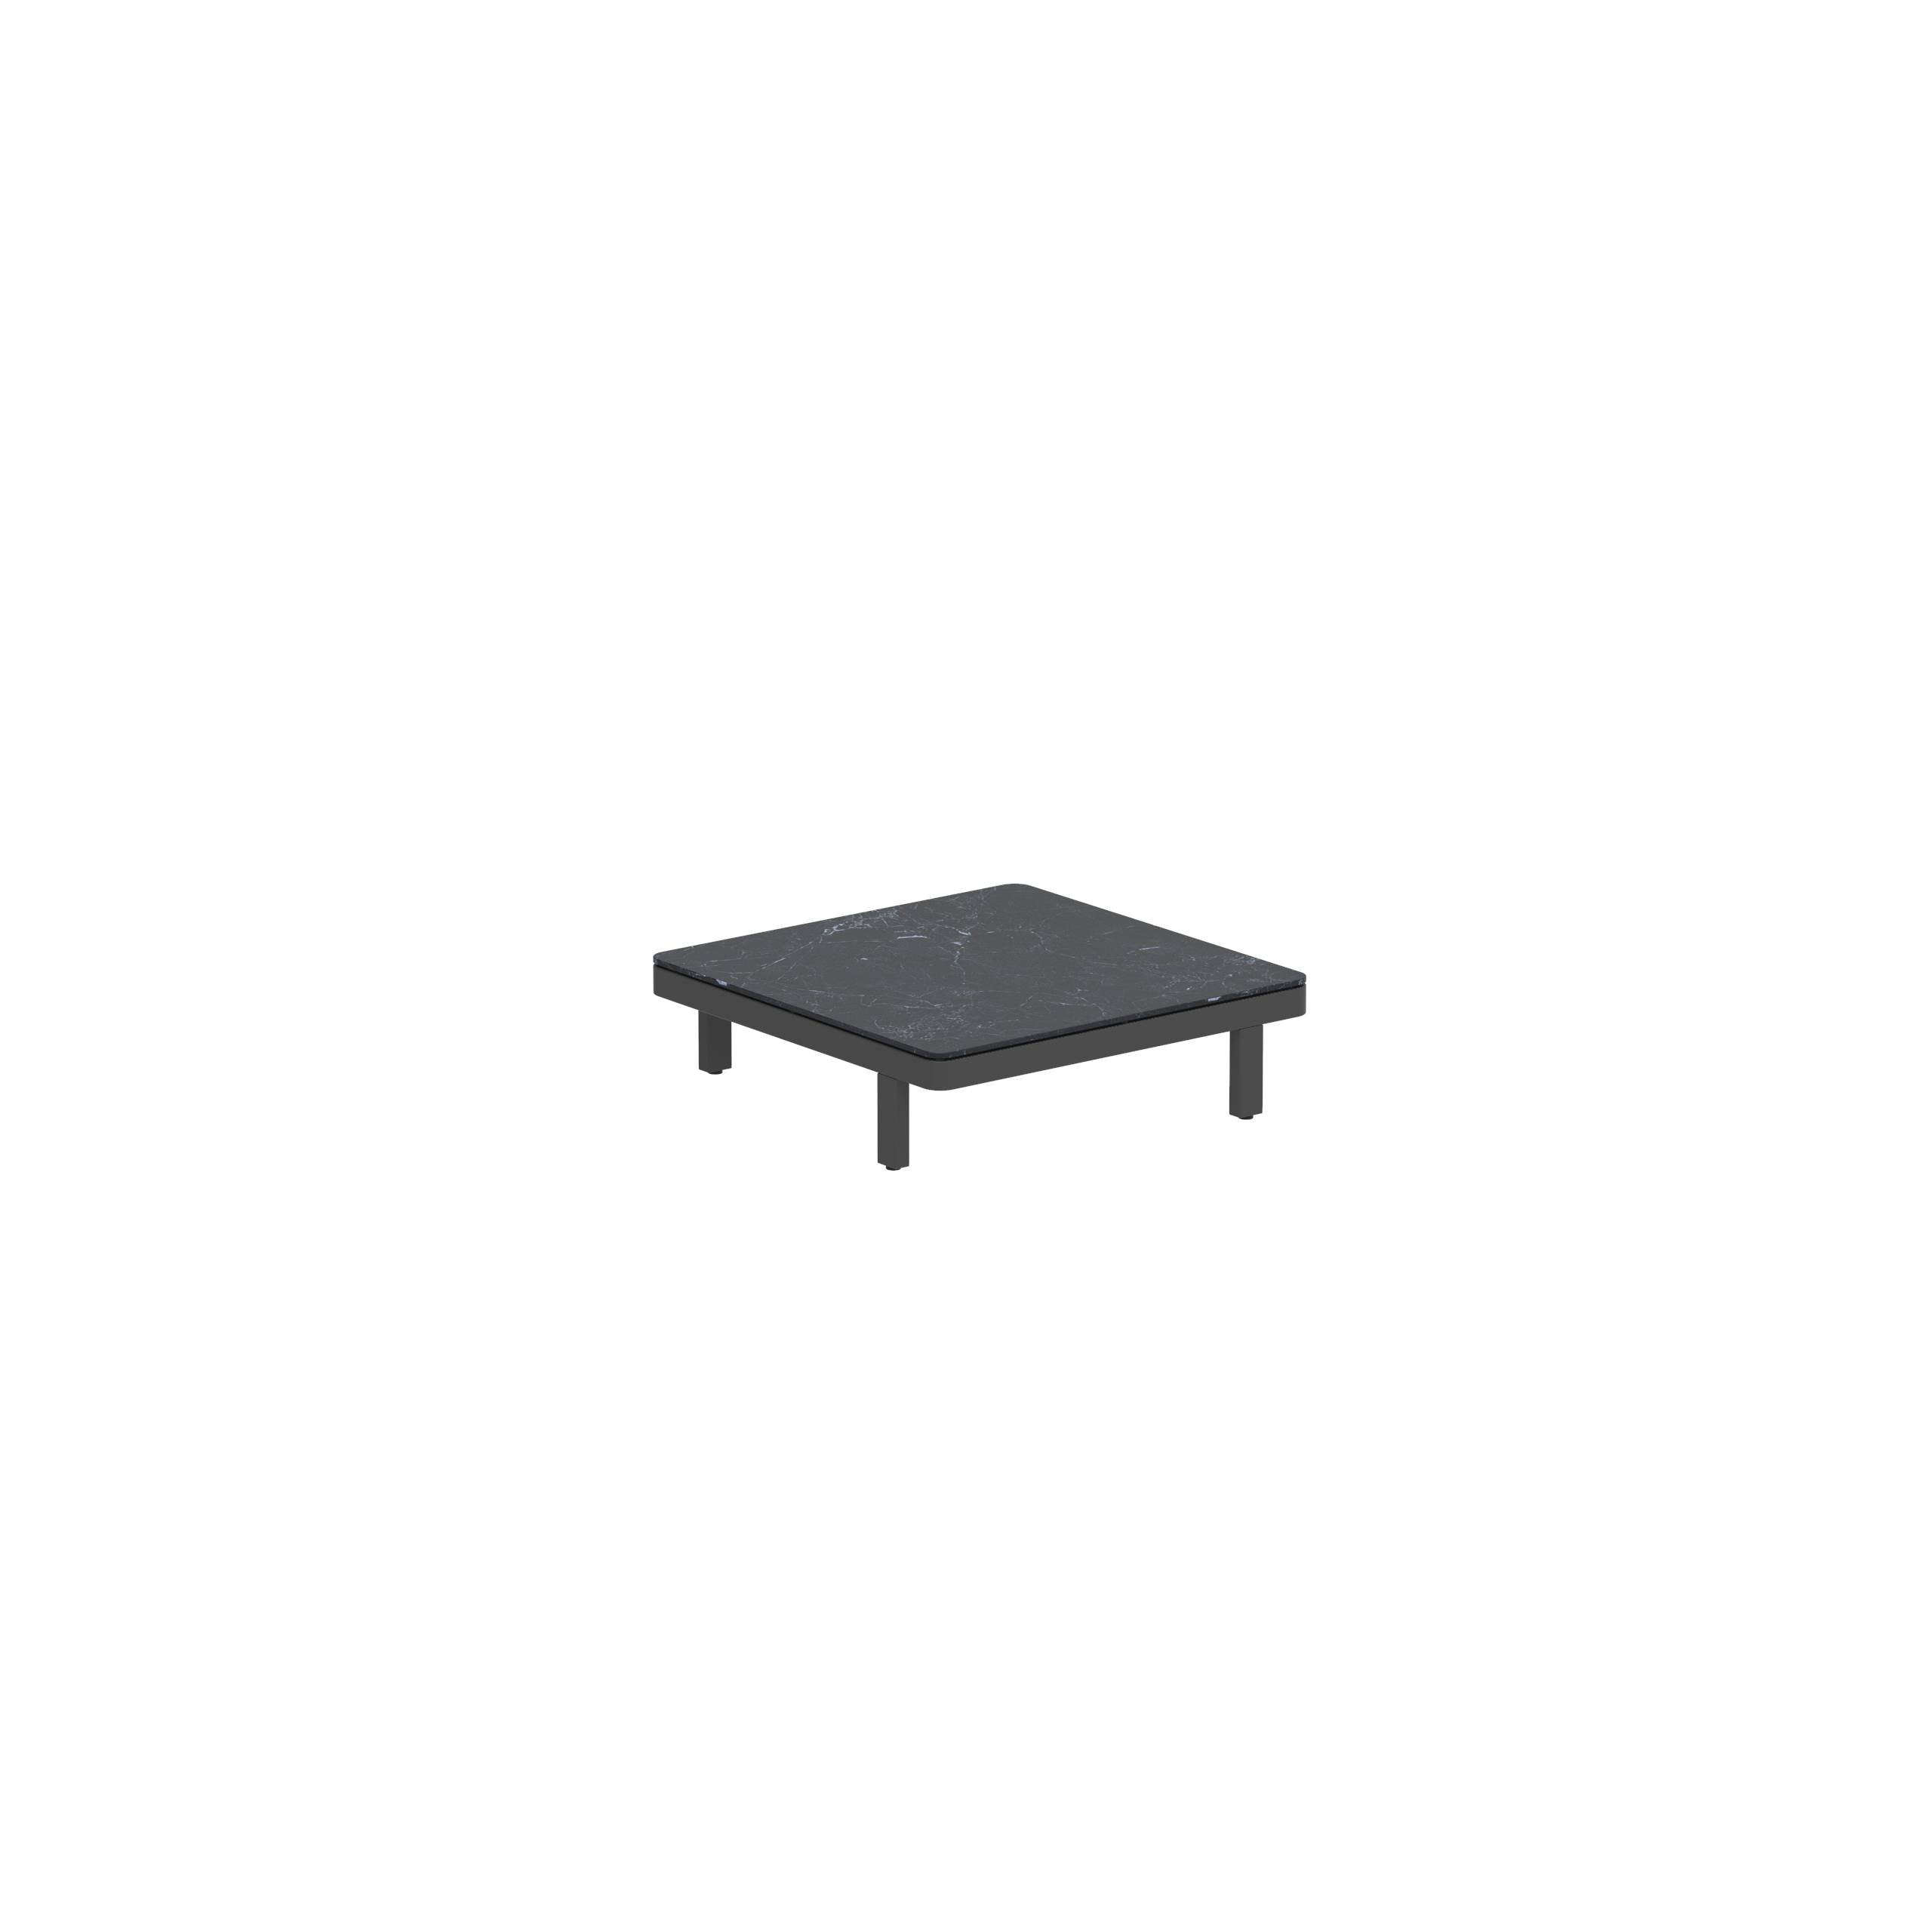 Alura Lounge 80 Ltl Table 80x80x23cm Black Ceramic Tabletop Nero Marquina